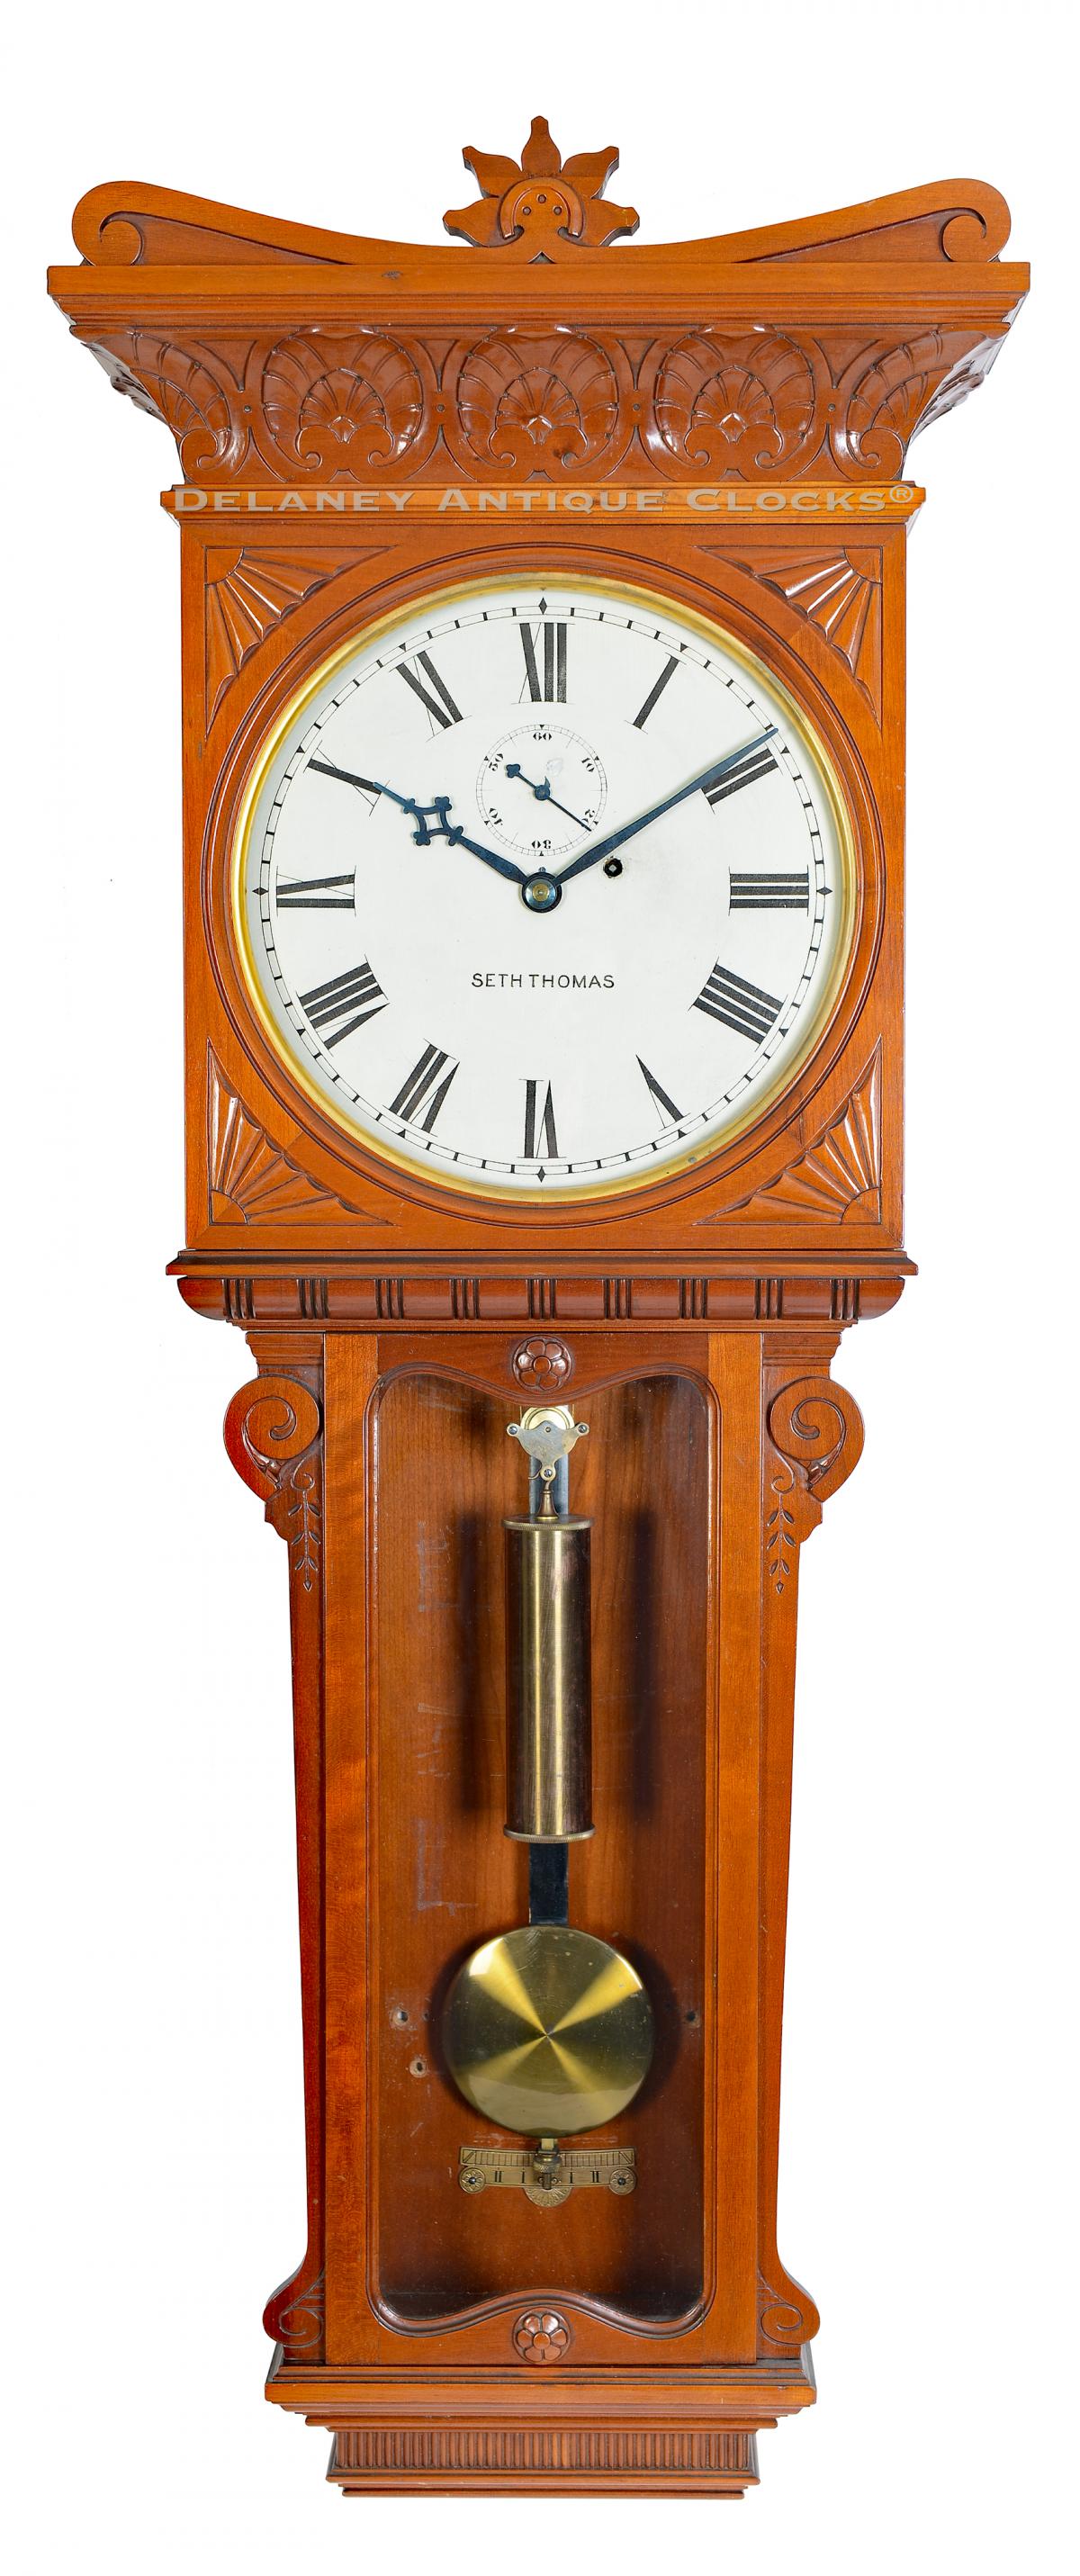 Seth Thomas "Regulator No. 7 long version." 223326. Delaney Antique Clocks.